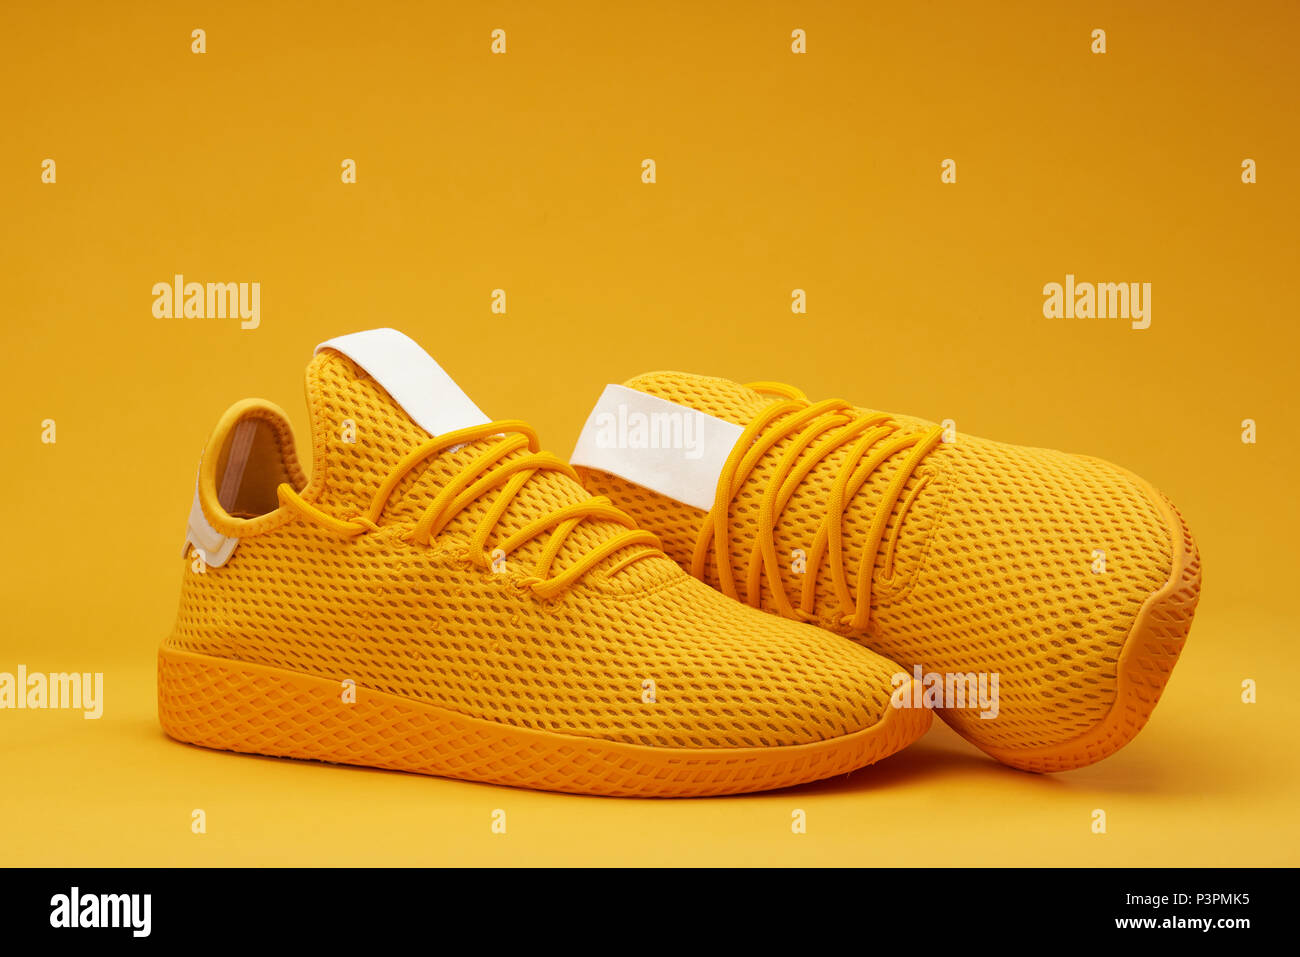 Yellow tennis modern shoes isolated on orange background Stock Photo